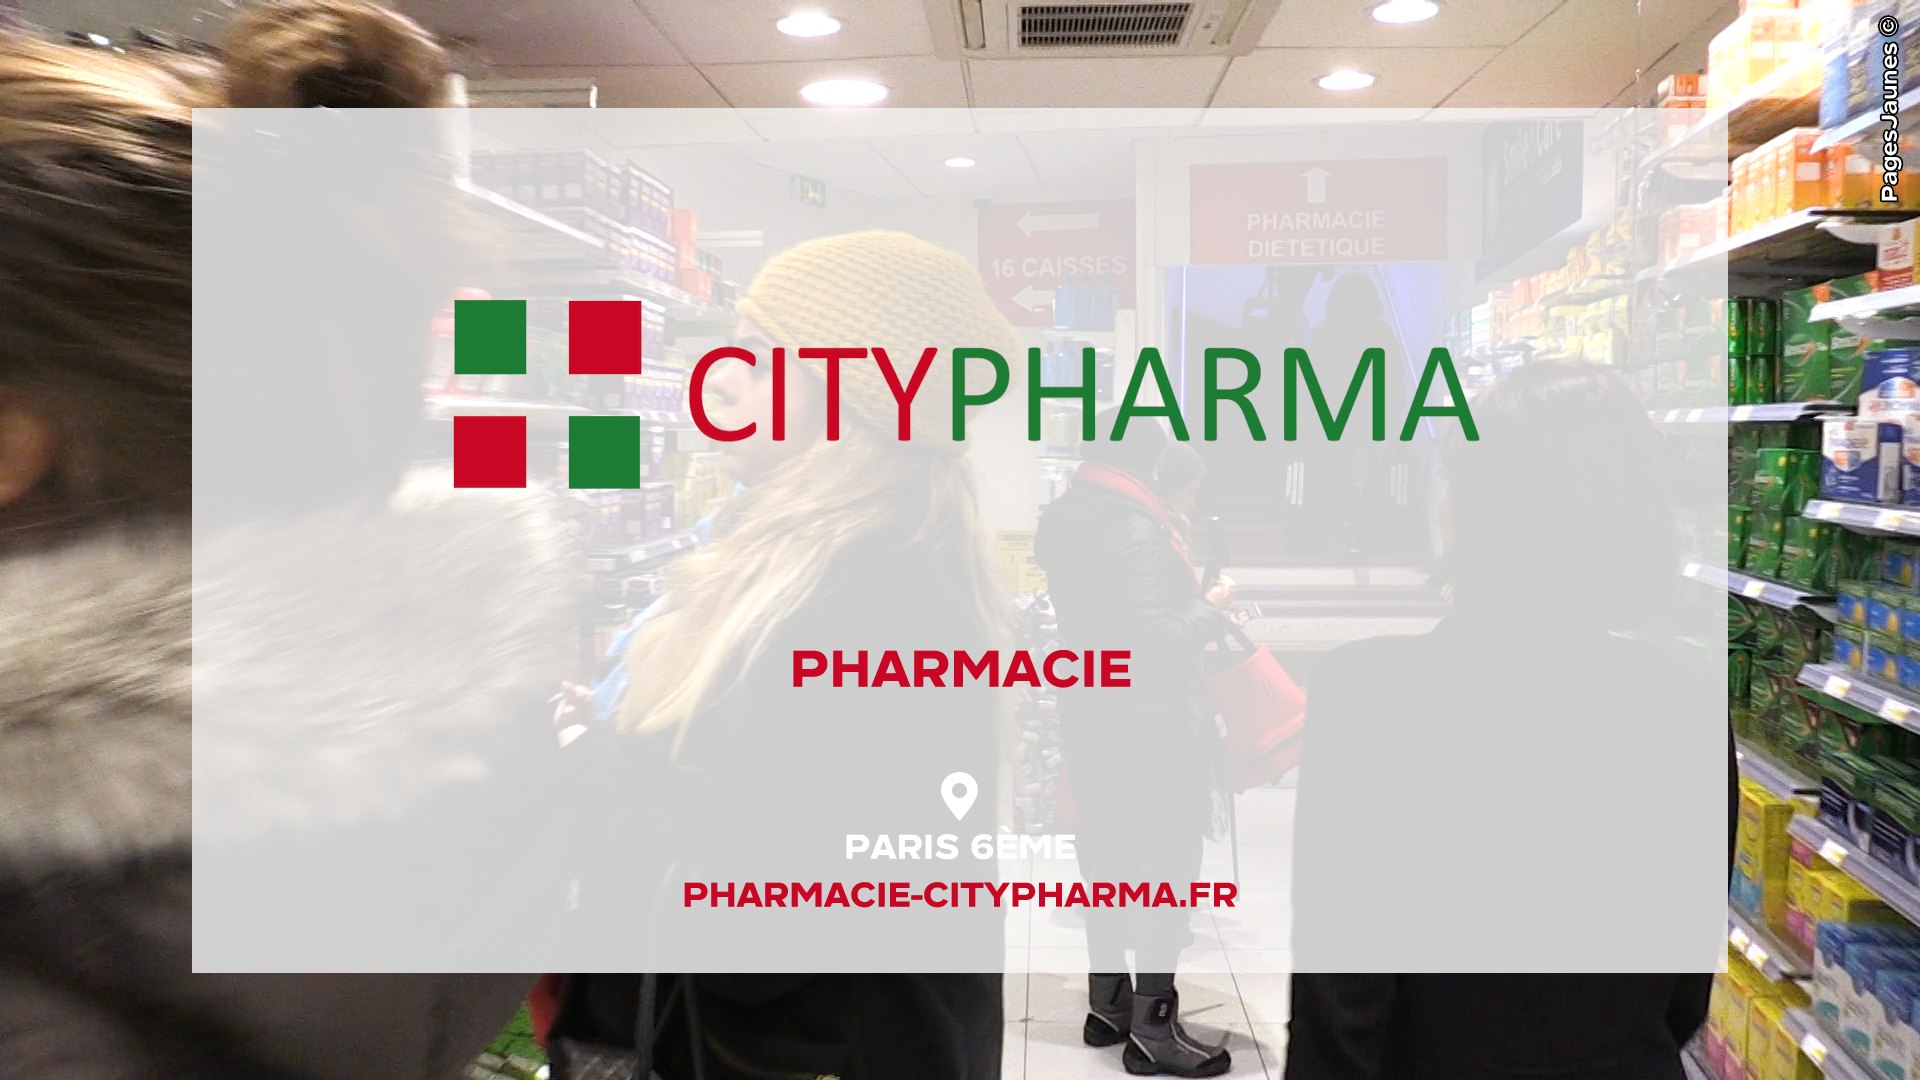 L'espace Pharmacie de Citypharma - Paris - Vidéo Dailymotion